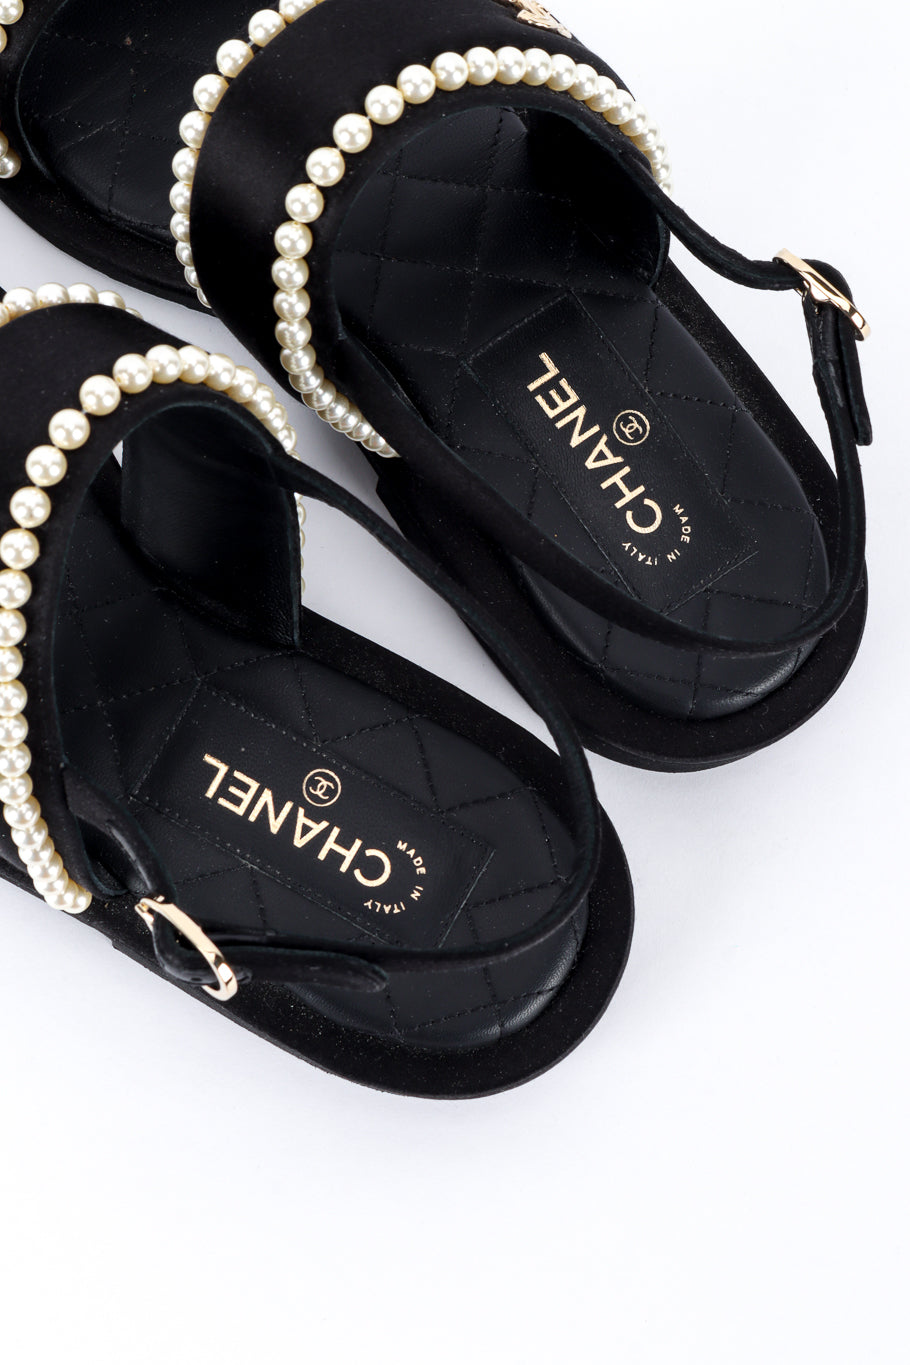 Chanel CC Satin & Pearl Sandals signed sole @recess la